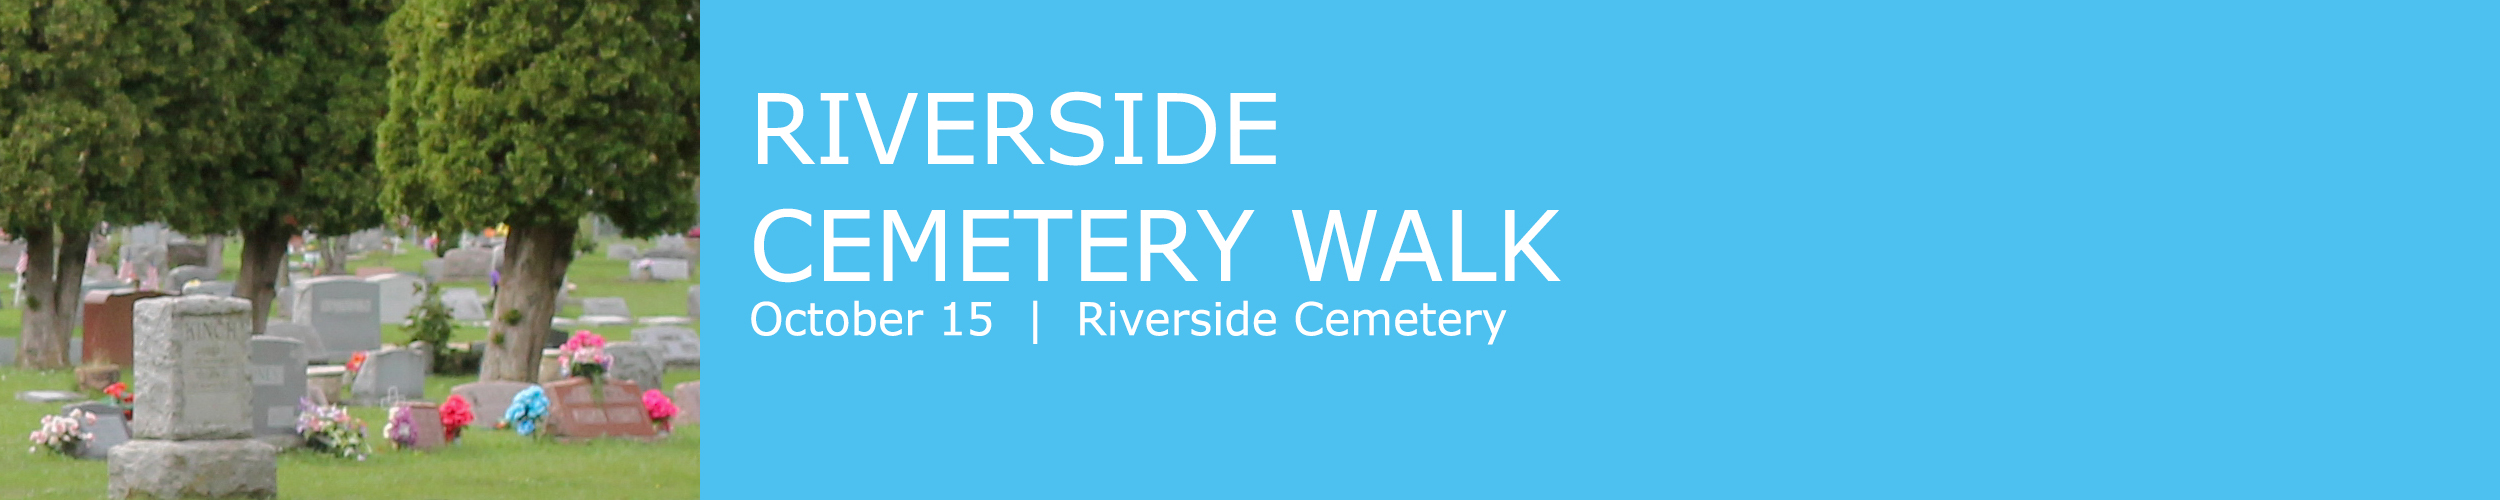 Image of cemeterey "Riverside Cemetery Walk"